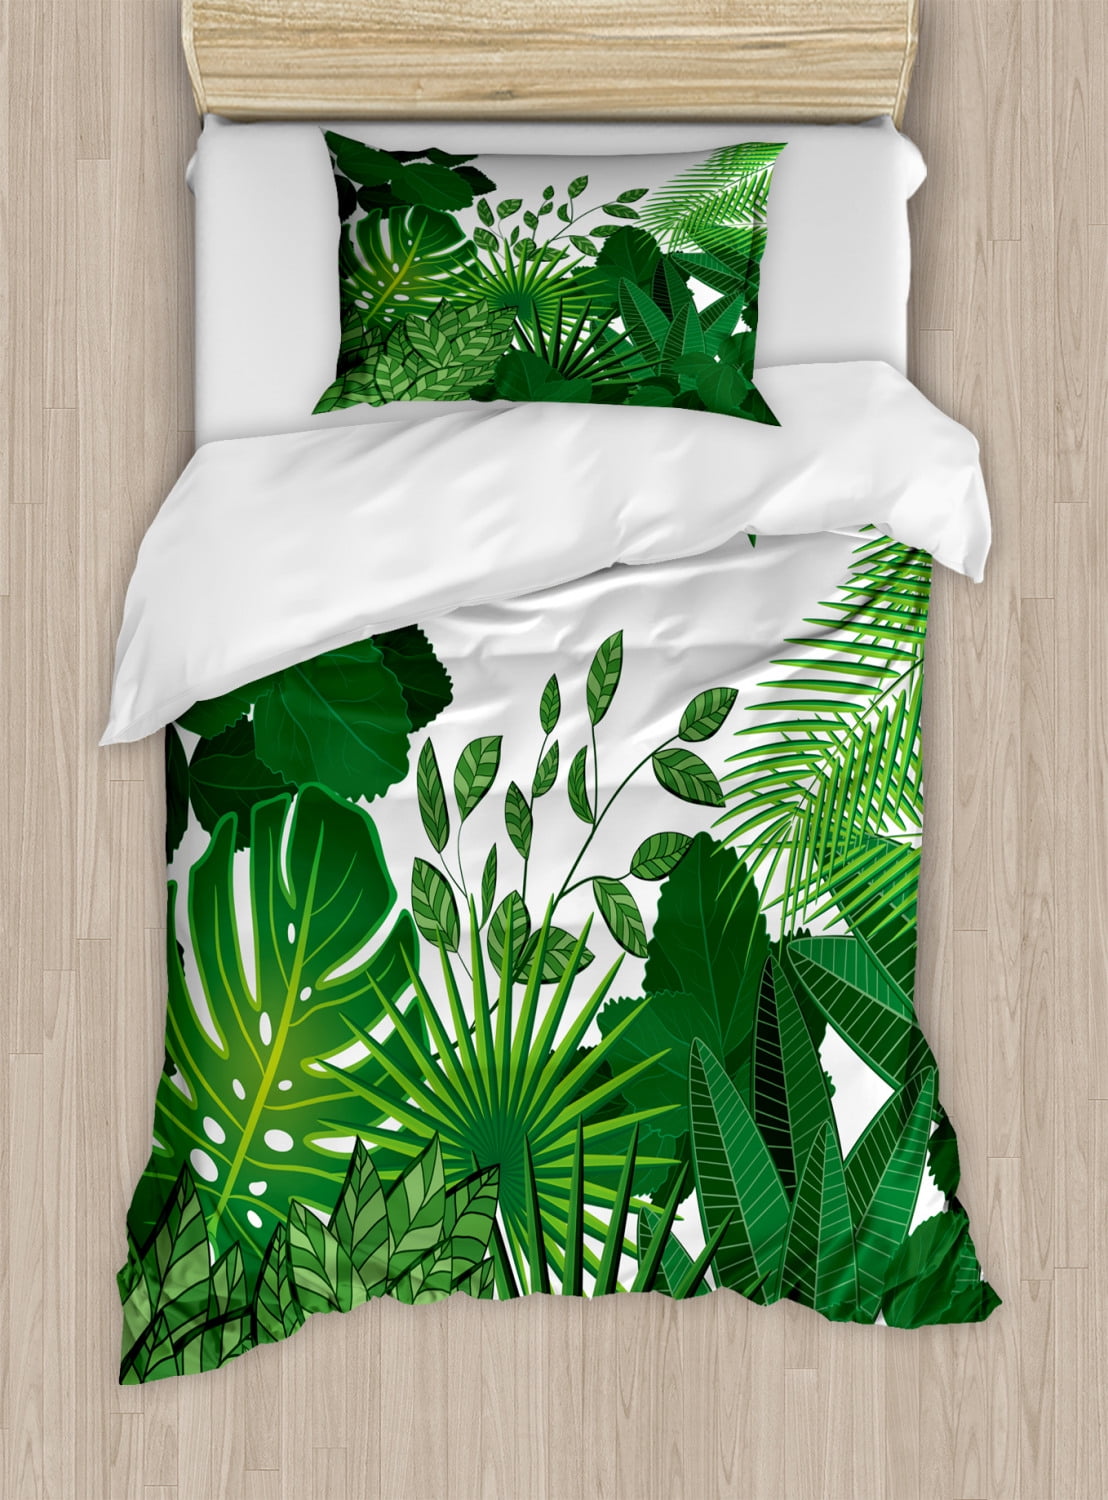 SCOTTISH Tartan Check Eucalyptus Floral Reversible Brushed Coton Duvet Cover SET 